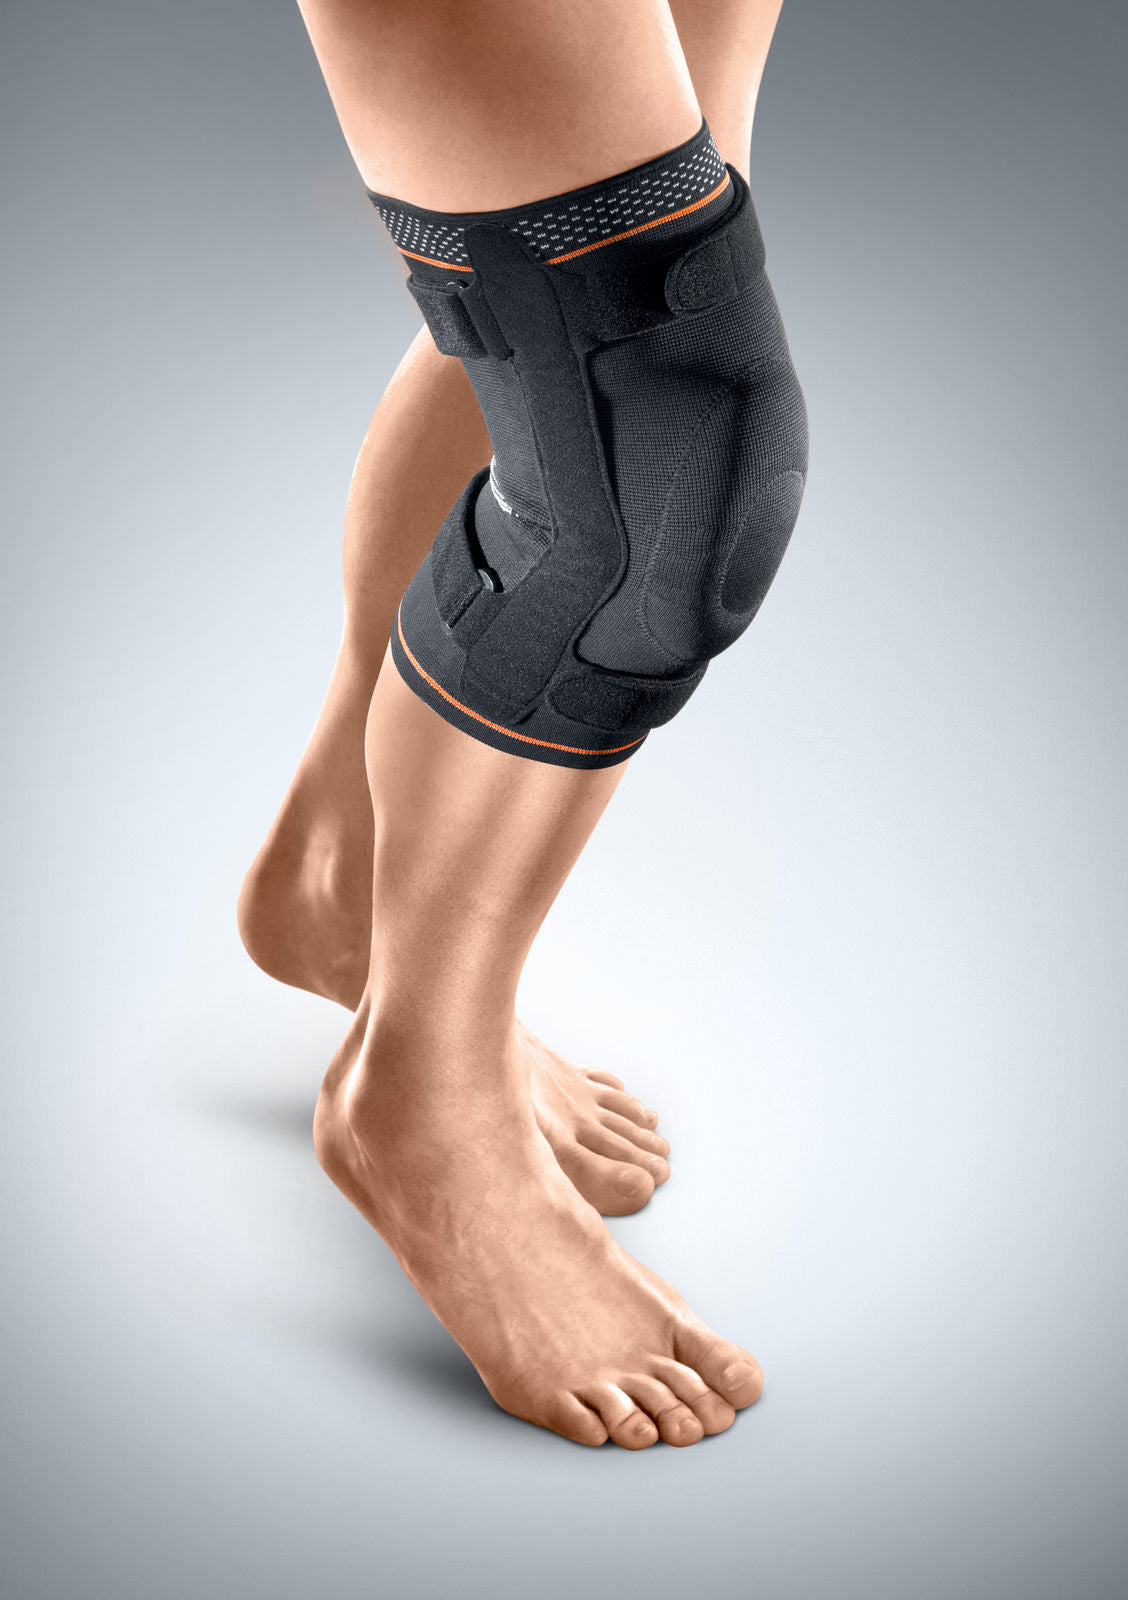 Putting on United Ortho Anterior Functional Knee Brace 